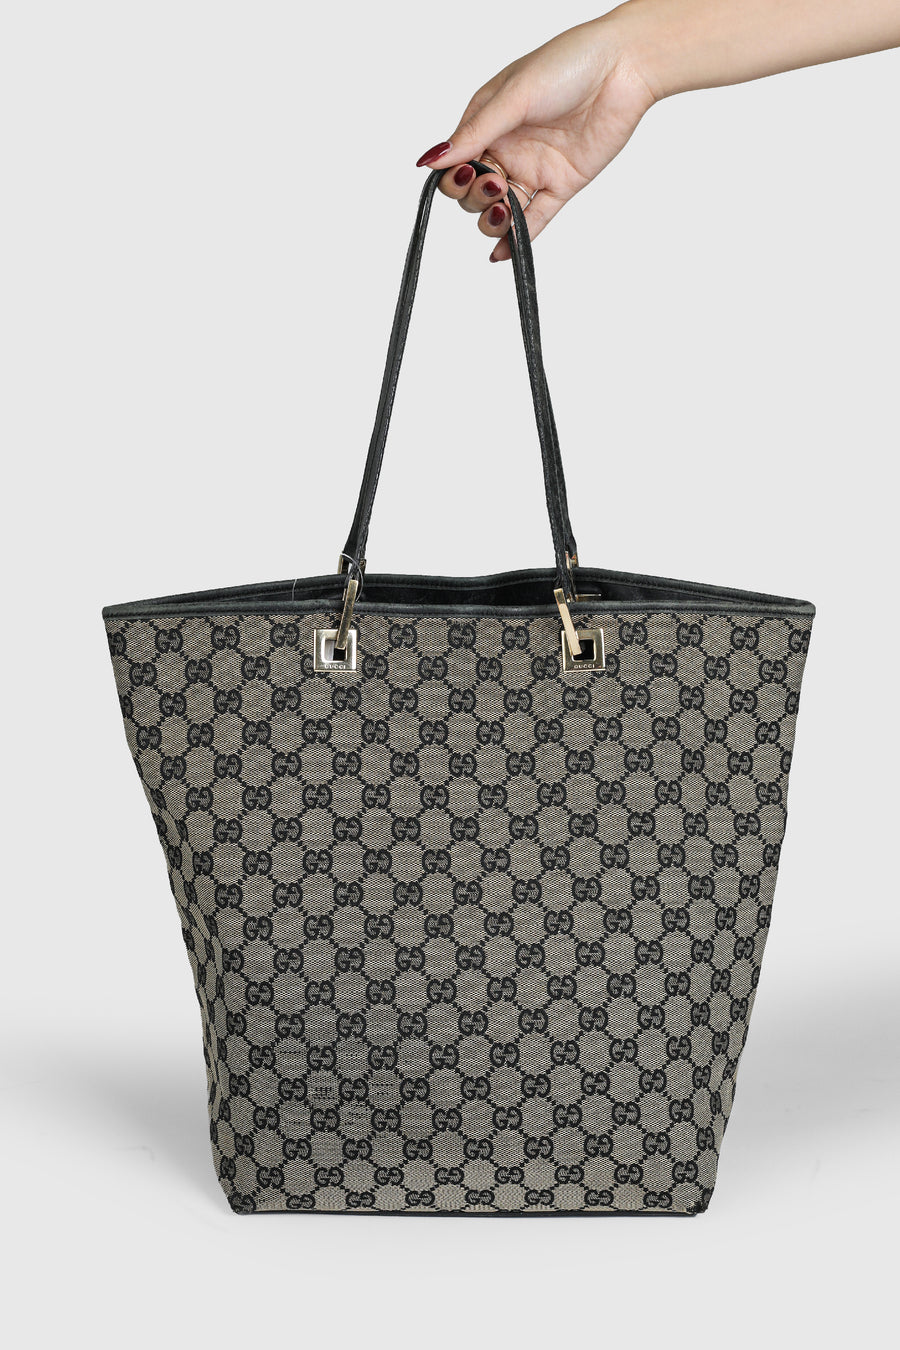 Gucci Boston Bag | Vintage gucci purse, Gucci vintage bag, Patent leather  bag